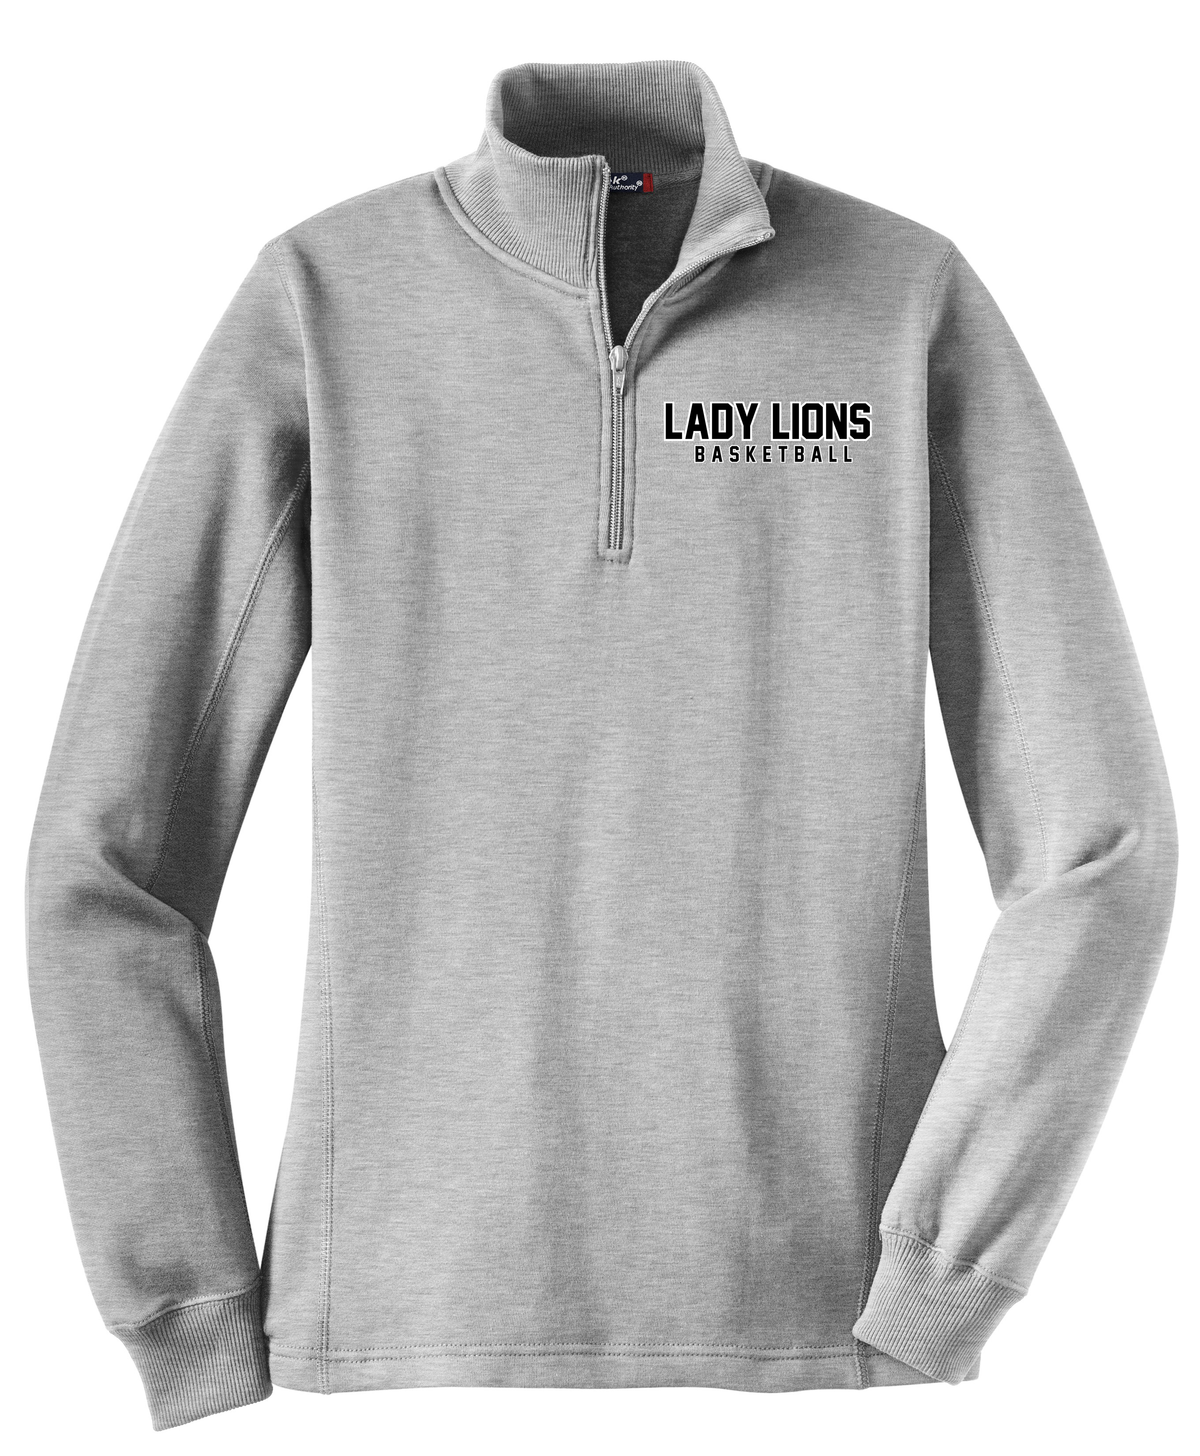 Lady Lions Basketball Women's 1/4 Zip Fleece